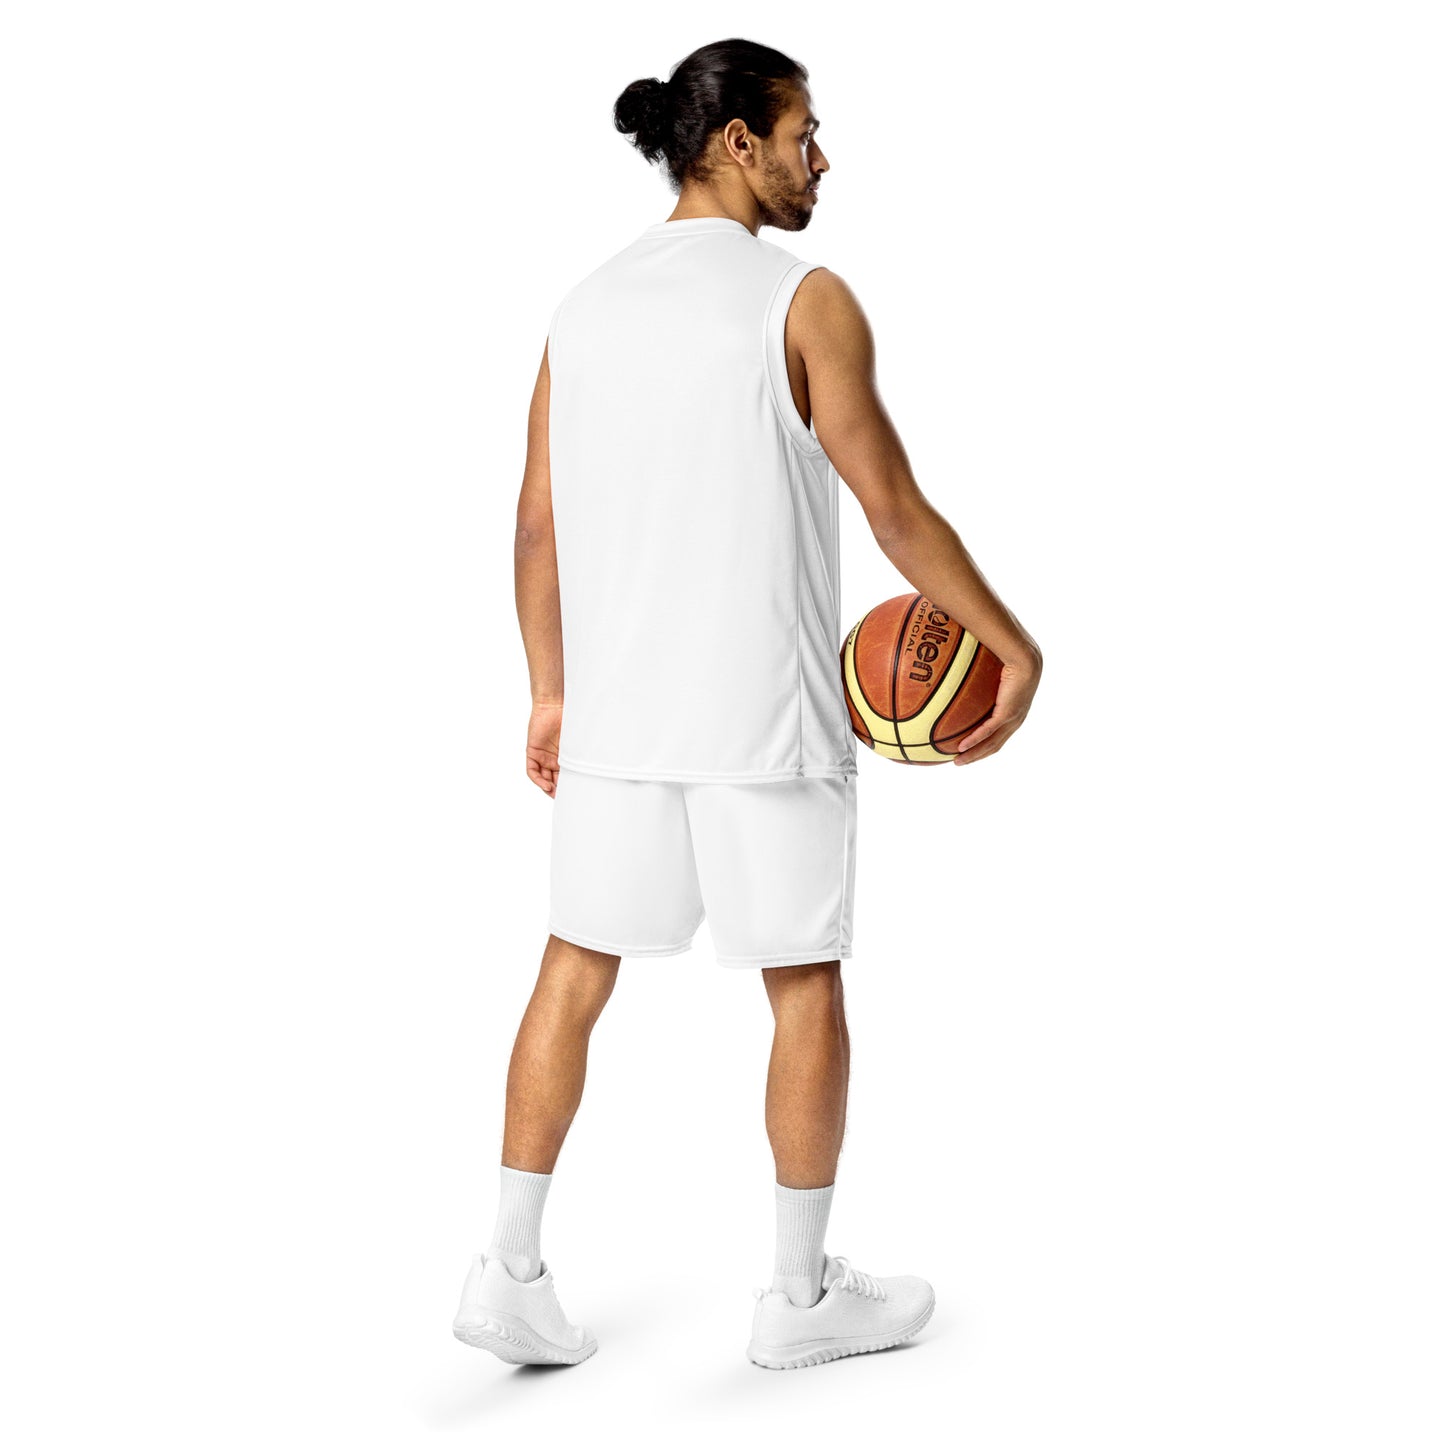 Humble Sportswear men’s color match shorts white, men’s mesh athletics shorts, men’s basketball shorts, active shorts for men, basketball shorts for men